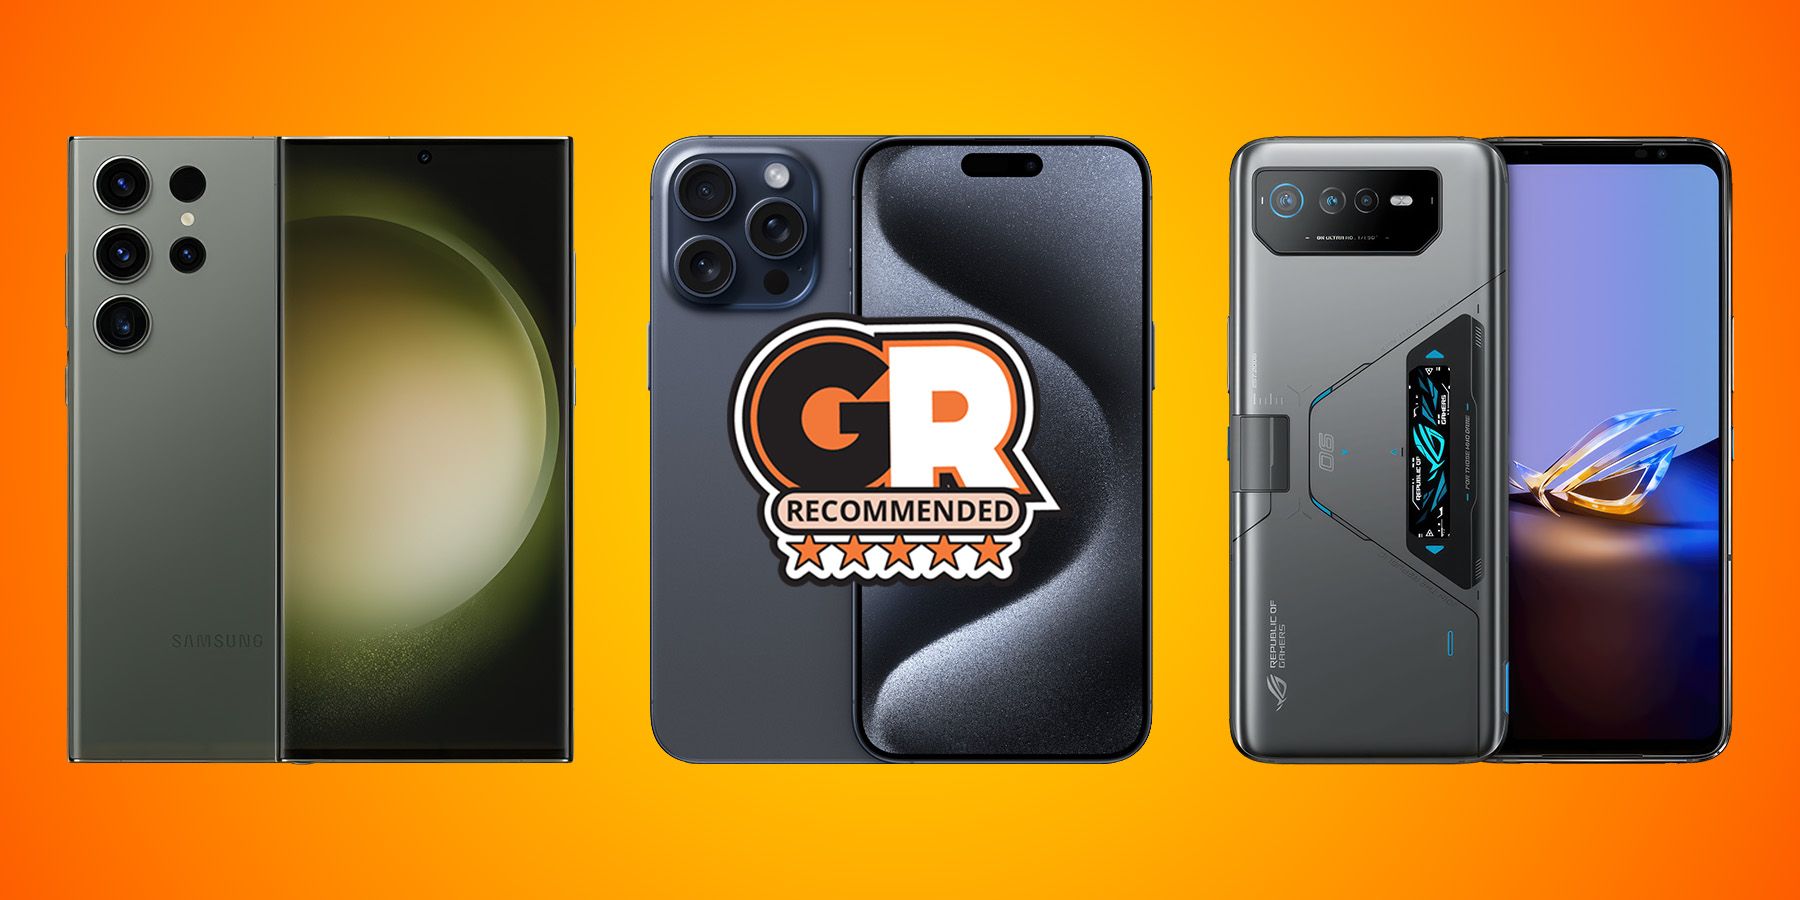 5 best games like GTA 5 for high-end smartphones